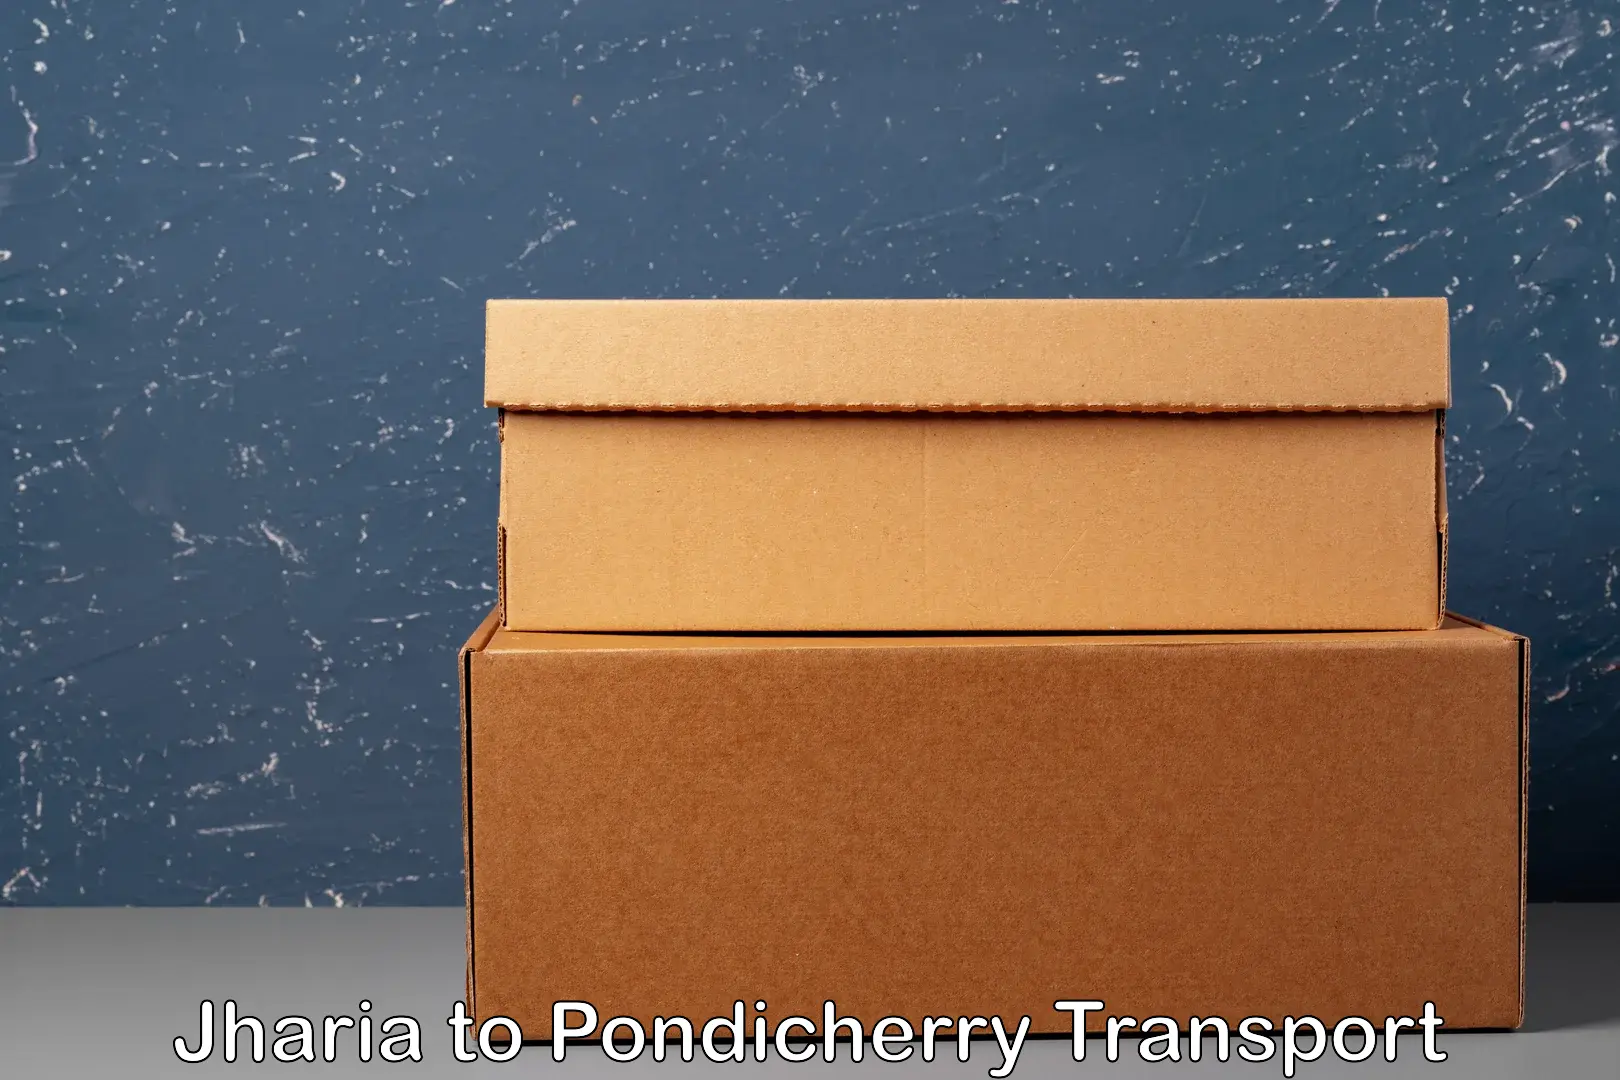 Shipping partner Jharia to Pondicherry